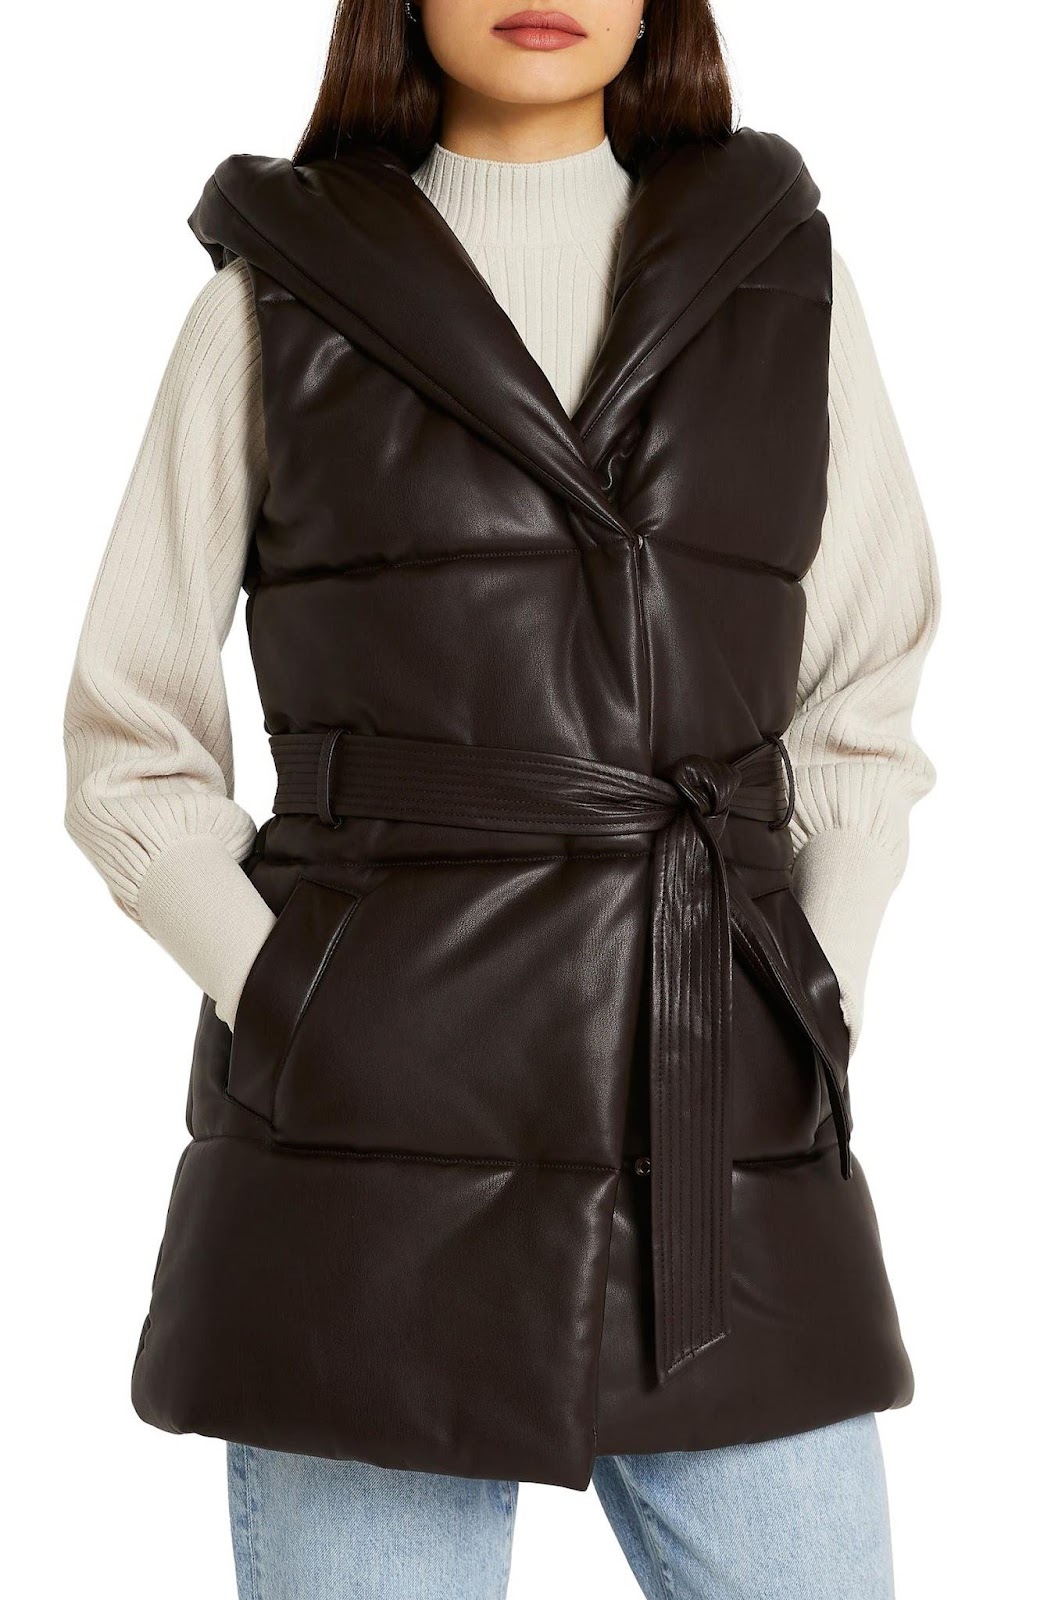 Puffer jackets and vests BELatina Latinx